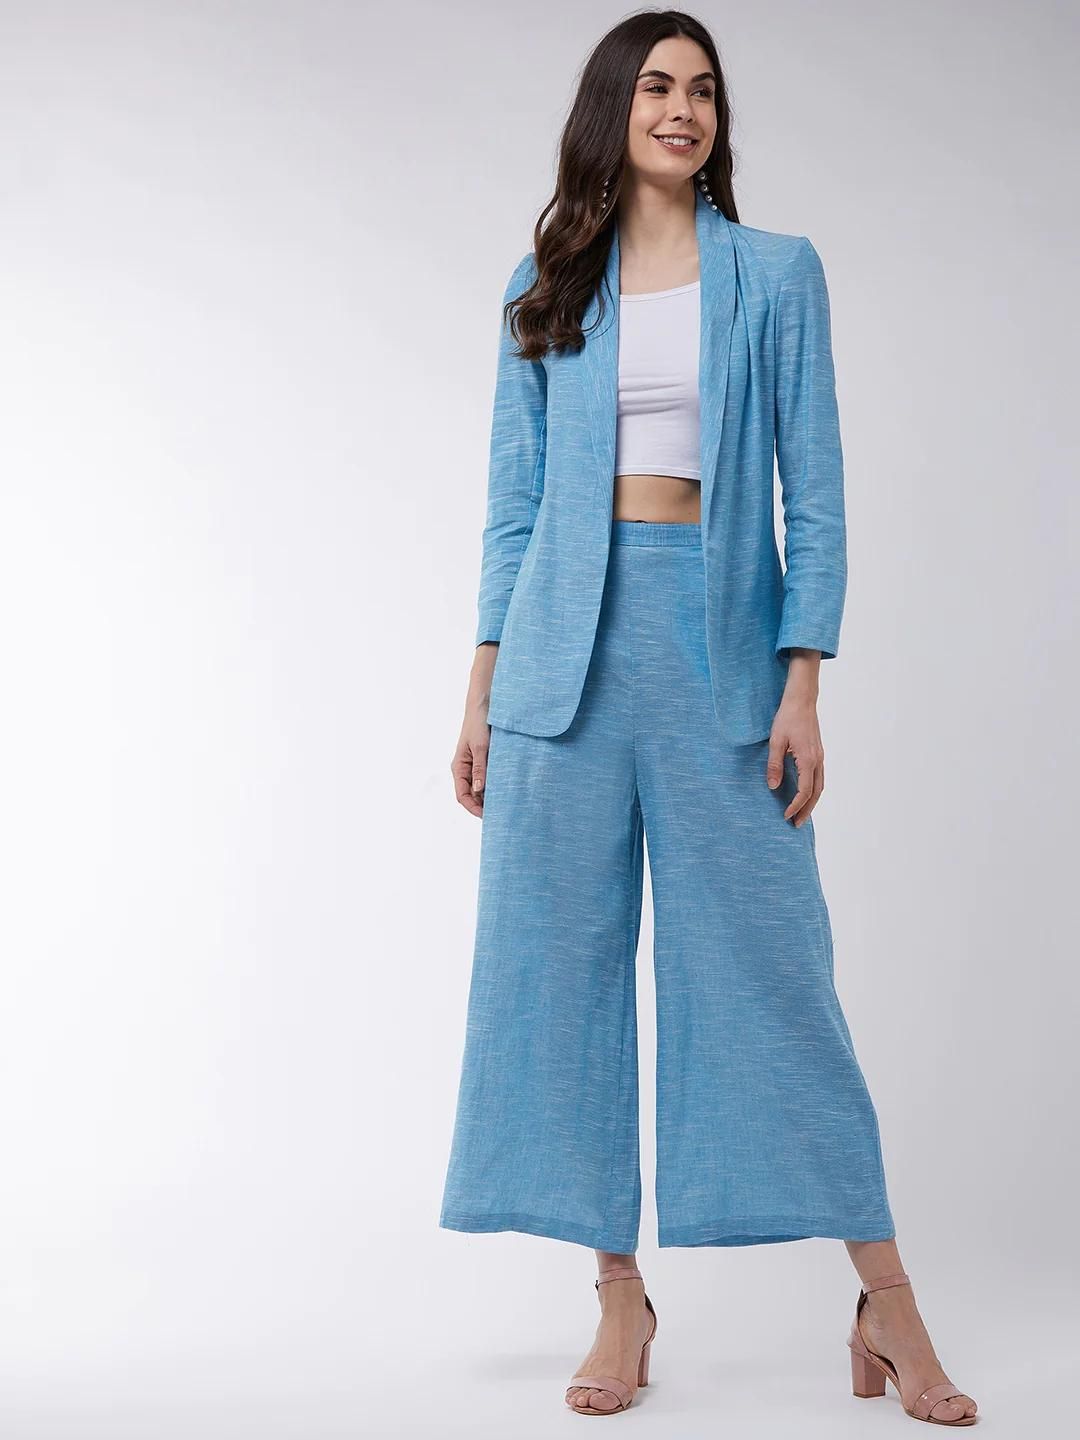 PANNKH Blue Chambray Long Blazer And Pant Set